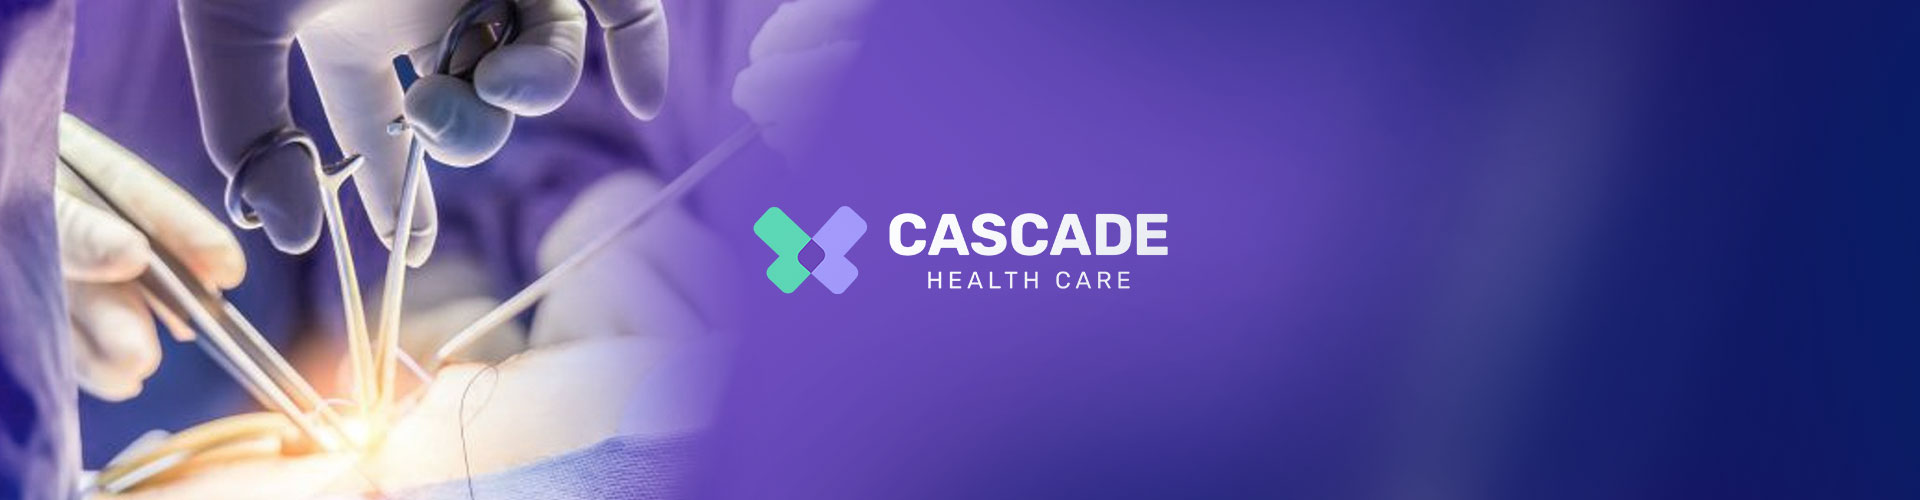 Cascade Health Care banner